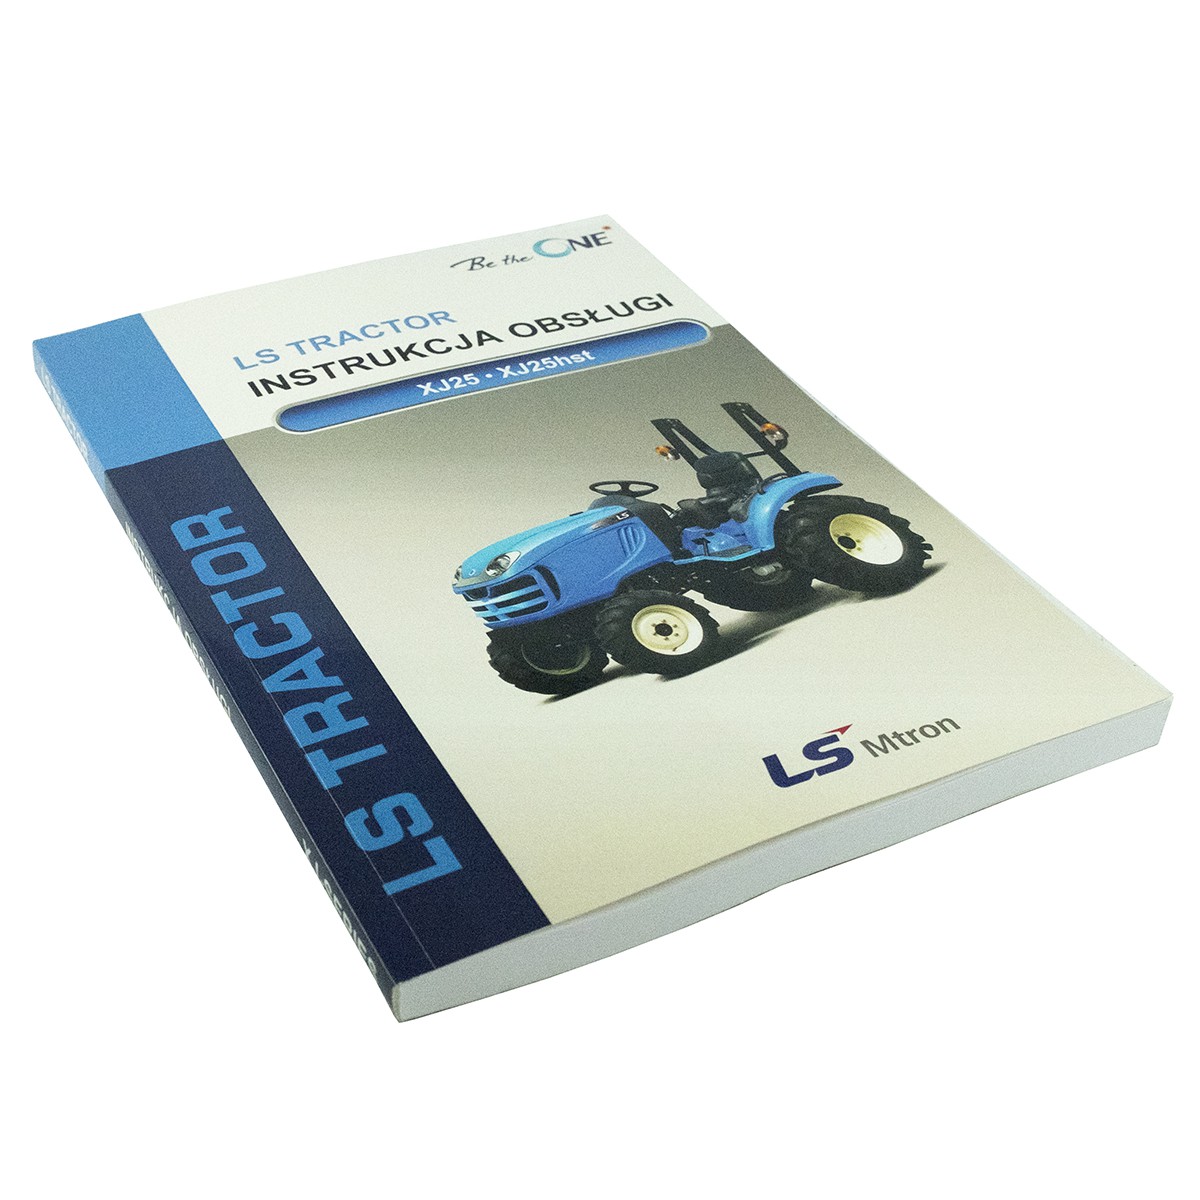 LS Tractor XJ25 / LS Tractor XJ25 HST Traktor Handbuch